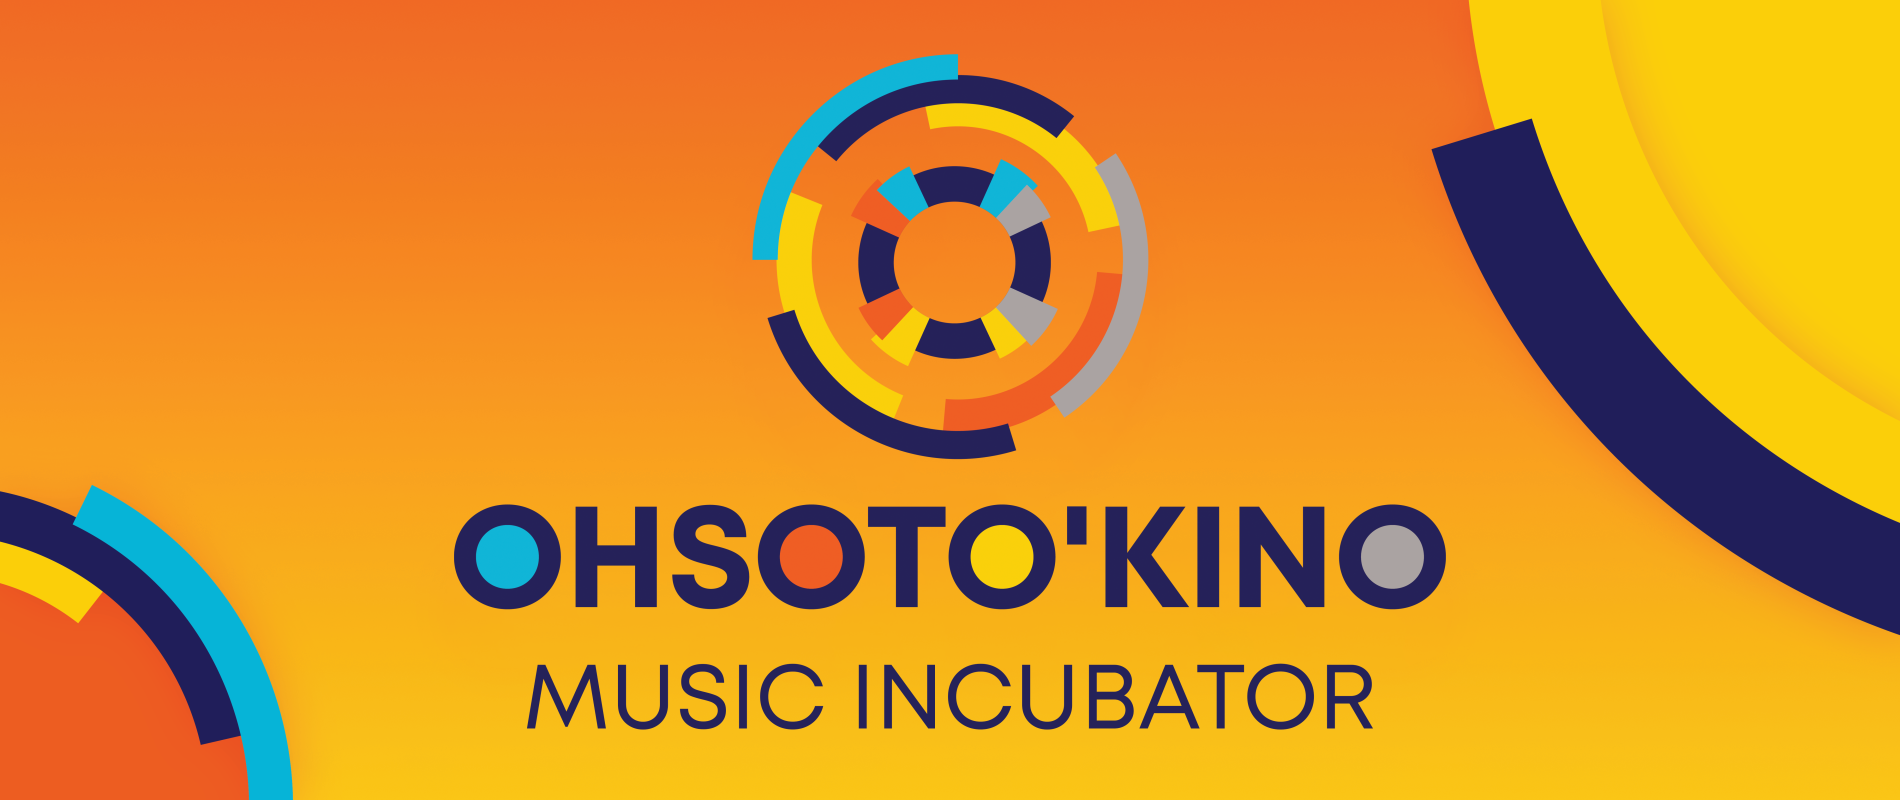 National Music Centre Names Recipients of OHSOTO’KINO Recording Bursary, Announces New Development Program for Indigenous Musicians